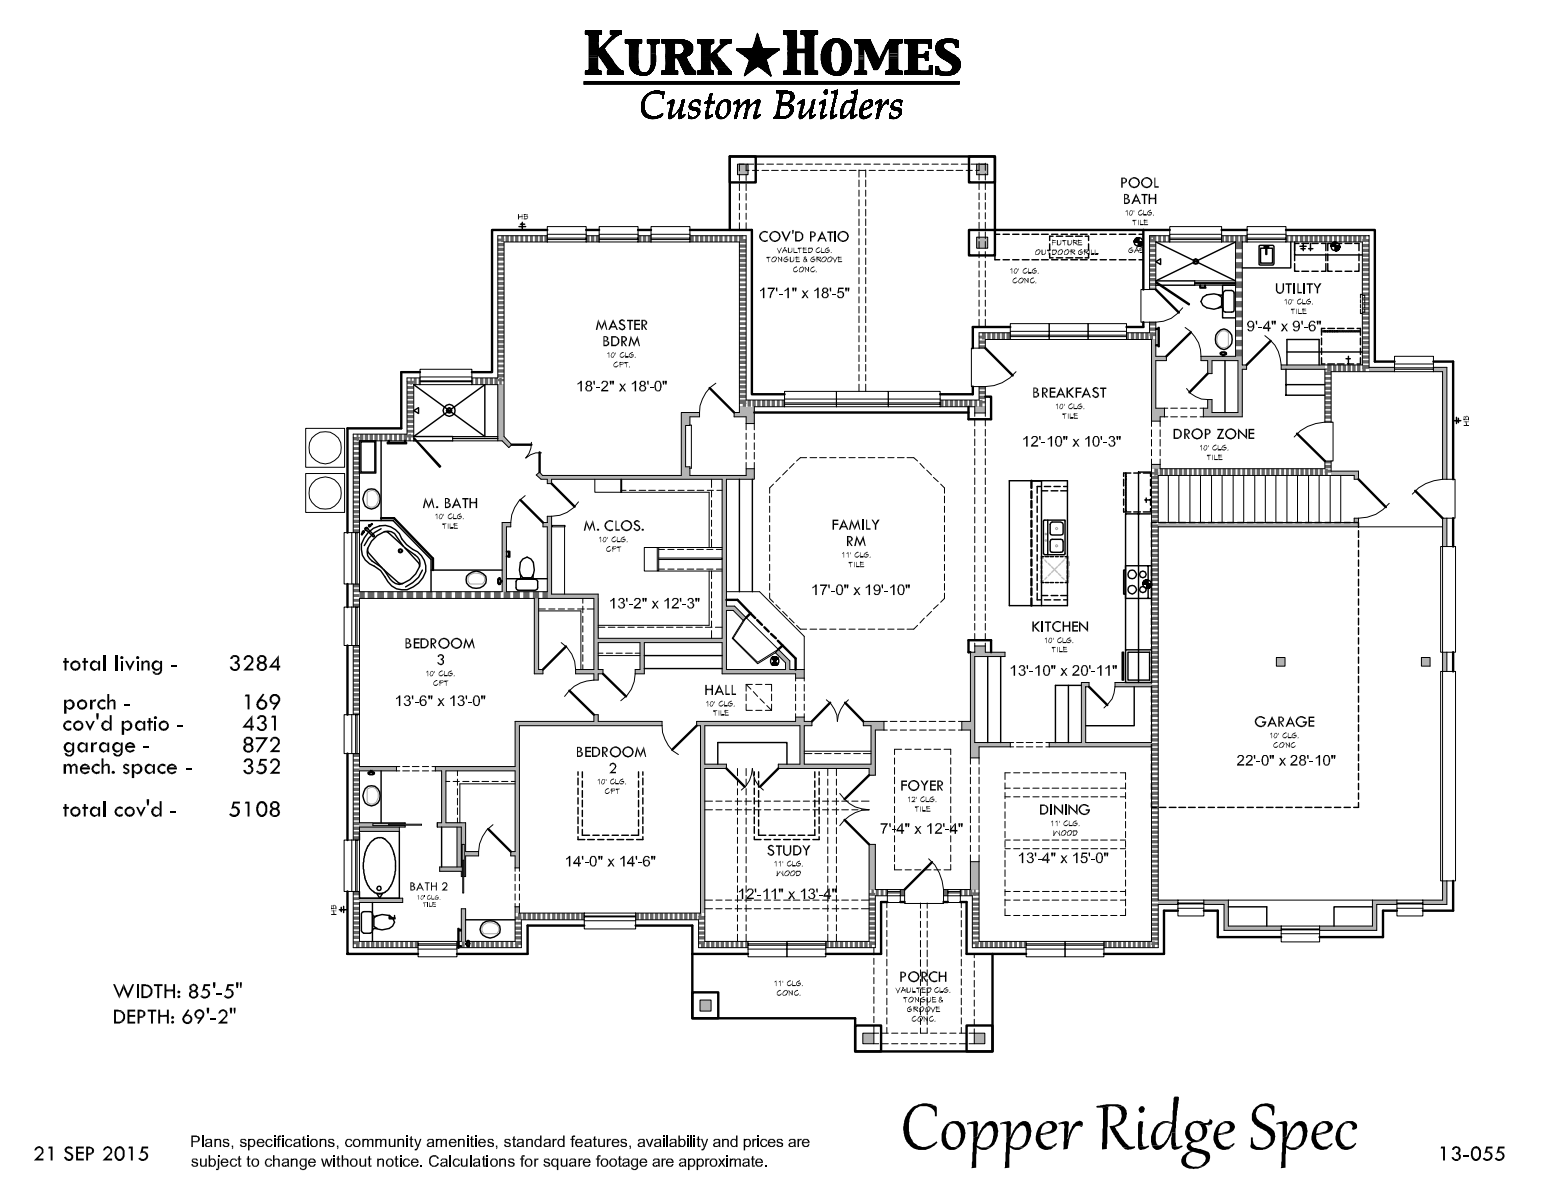 The Copper Ridge Model - Home Plan